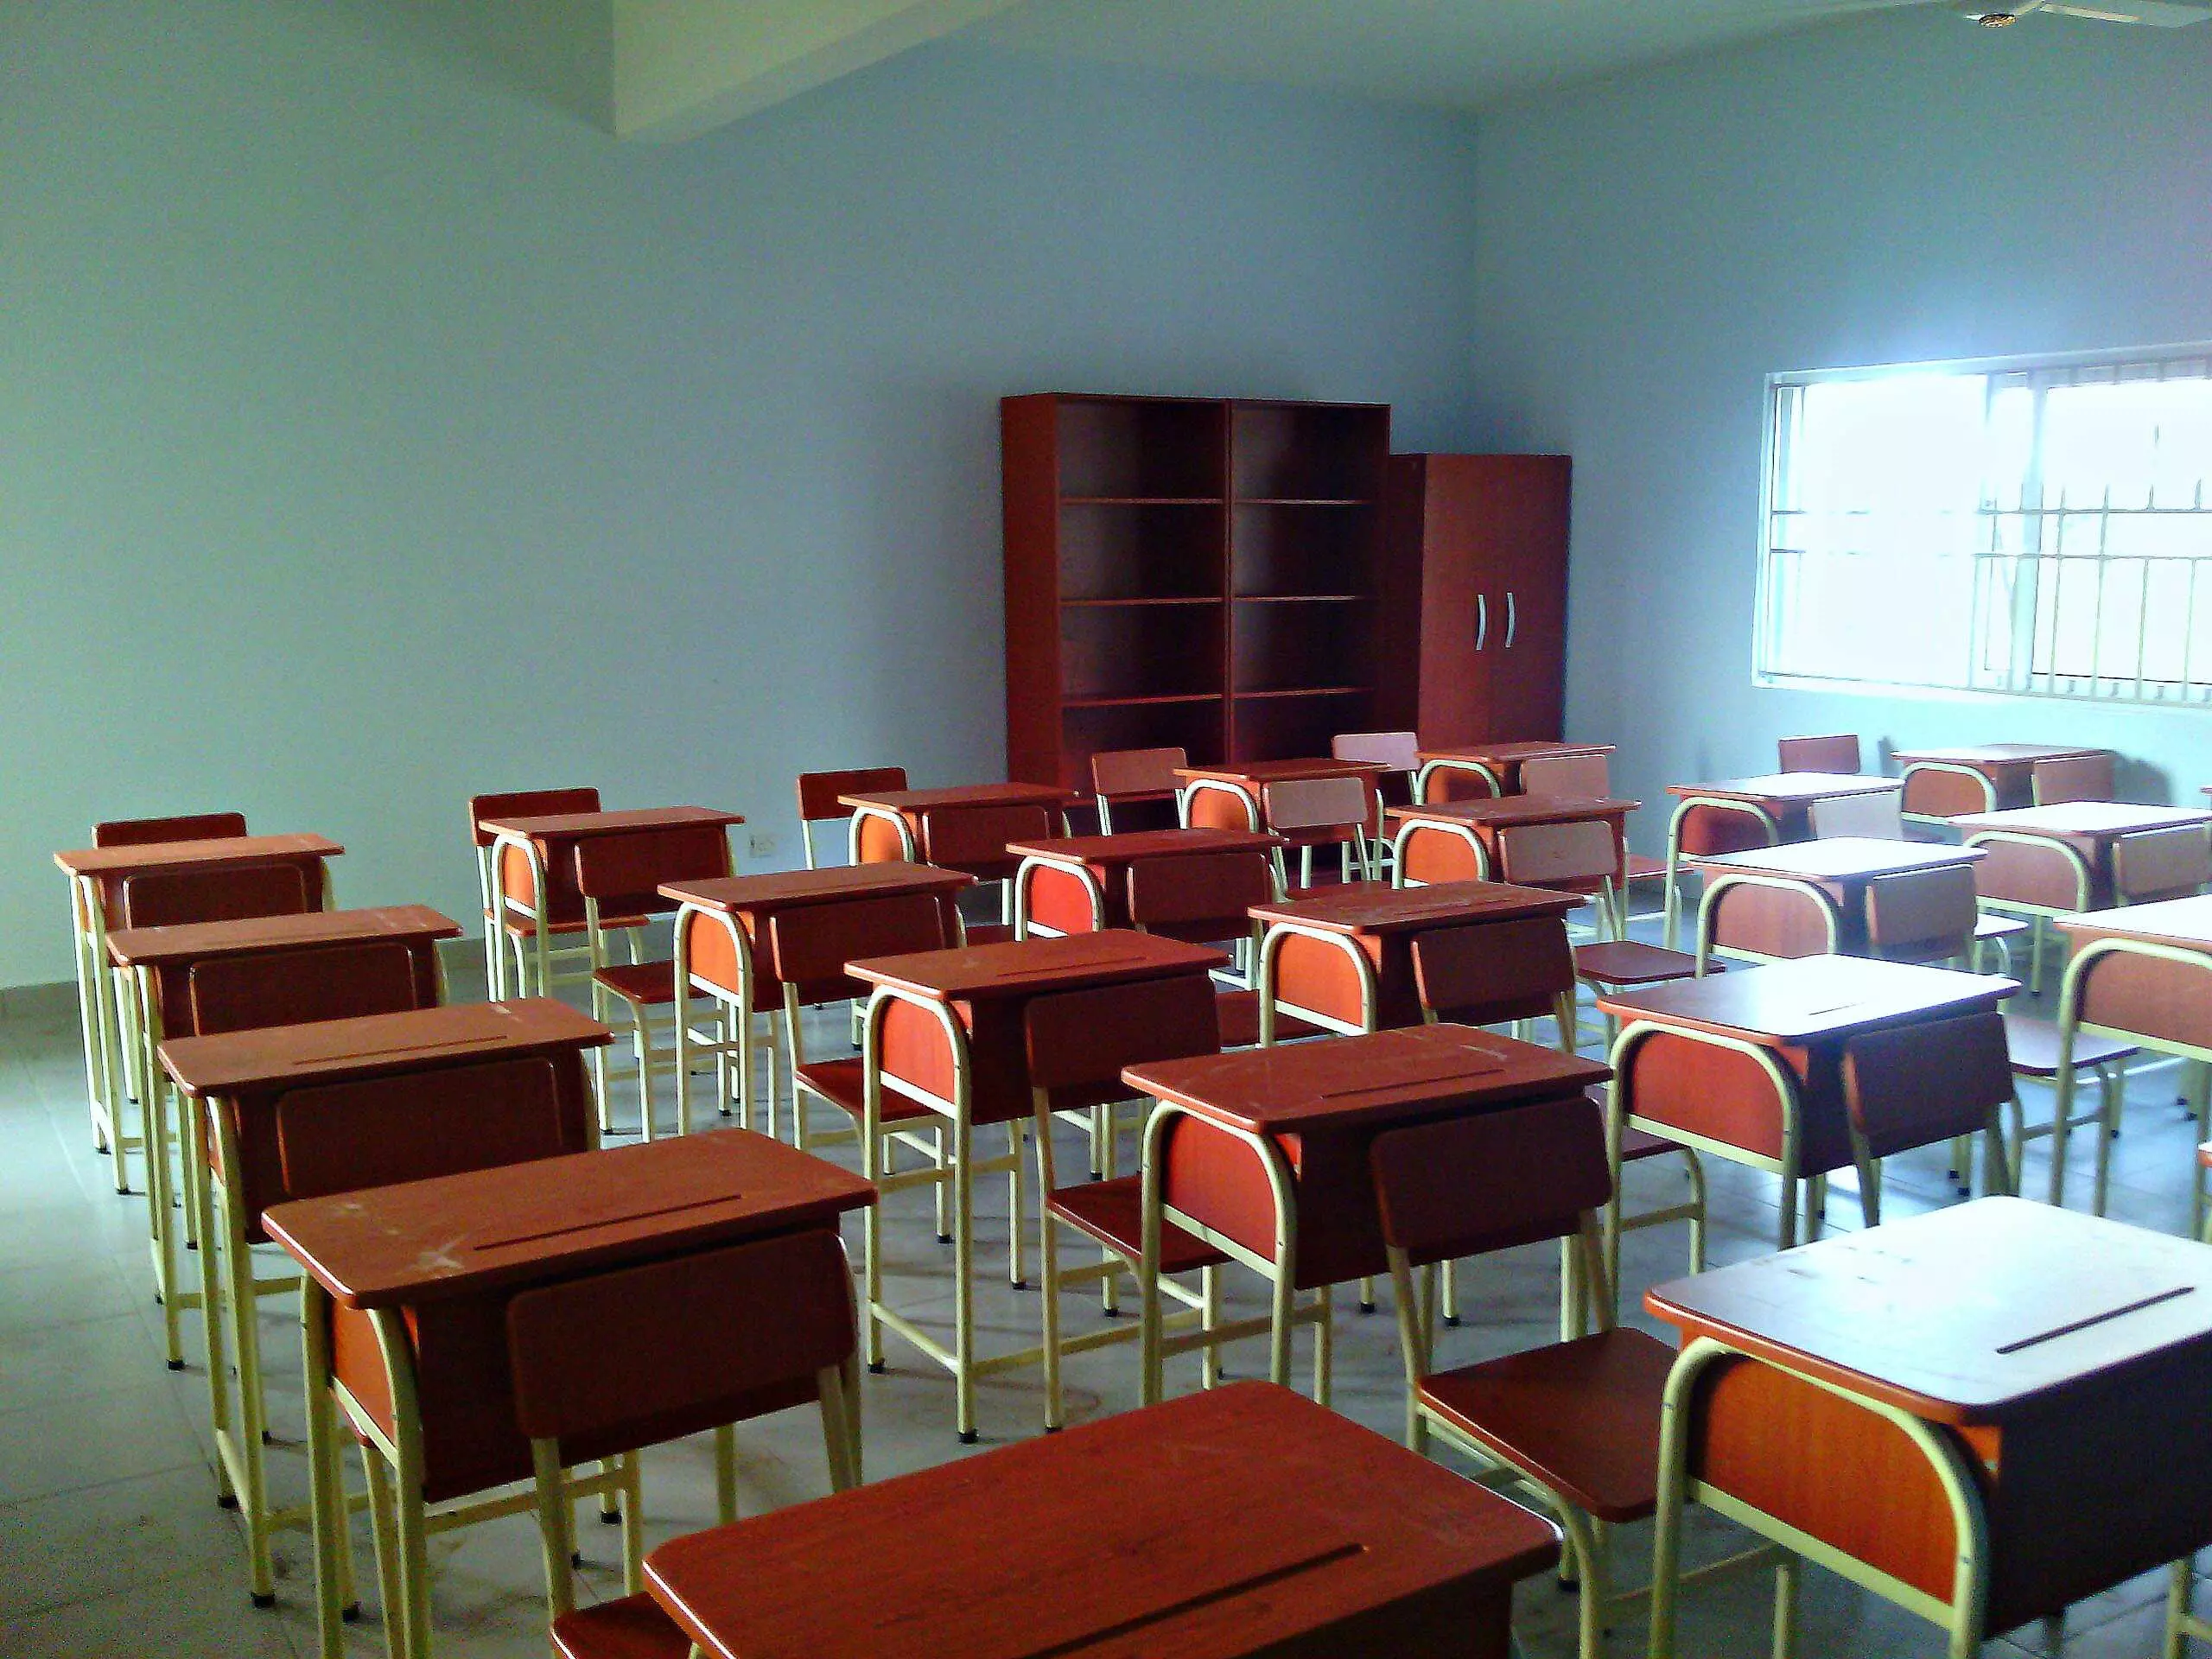 Kebbi Govt spends N2bn on school furniture in 3 years – Commissioner